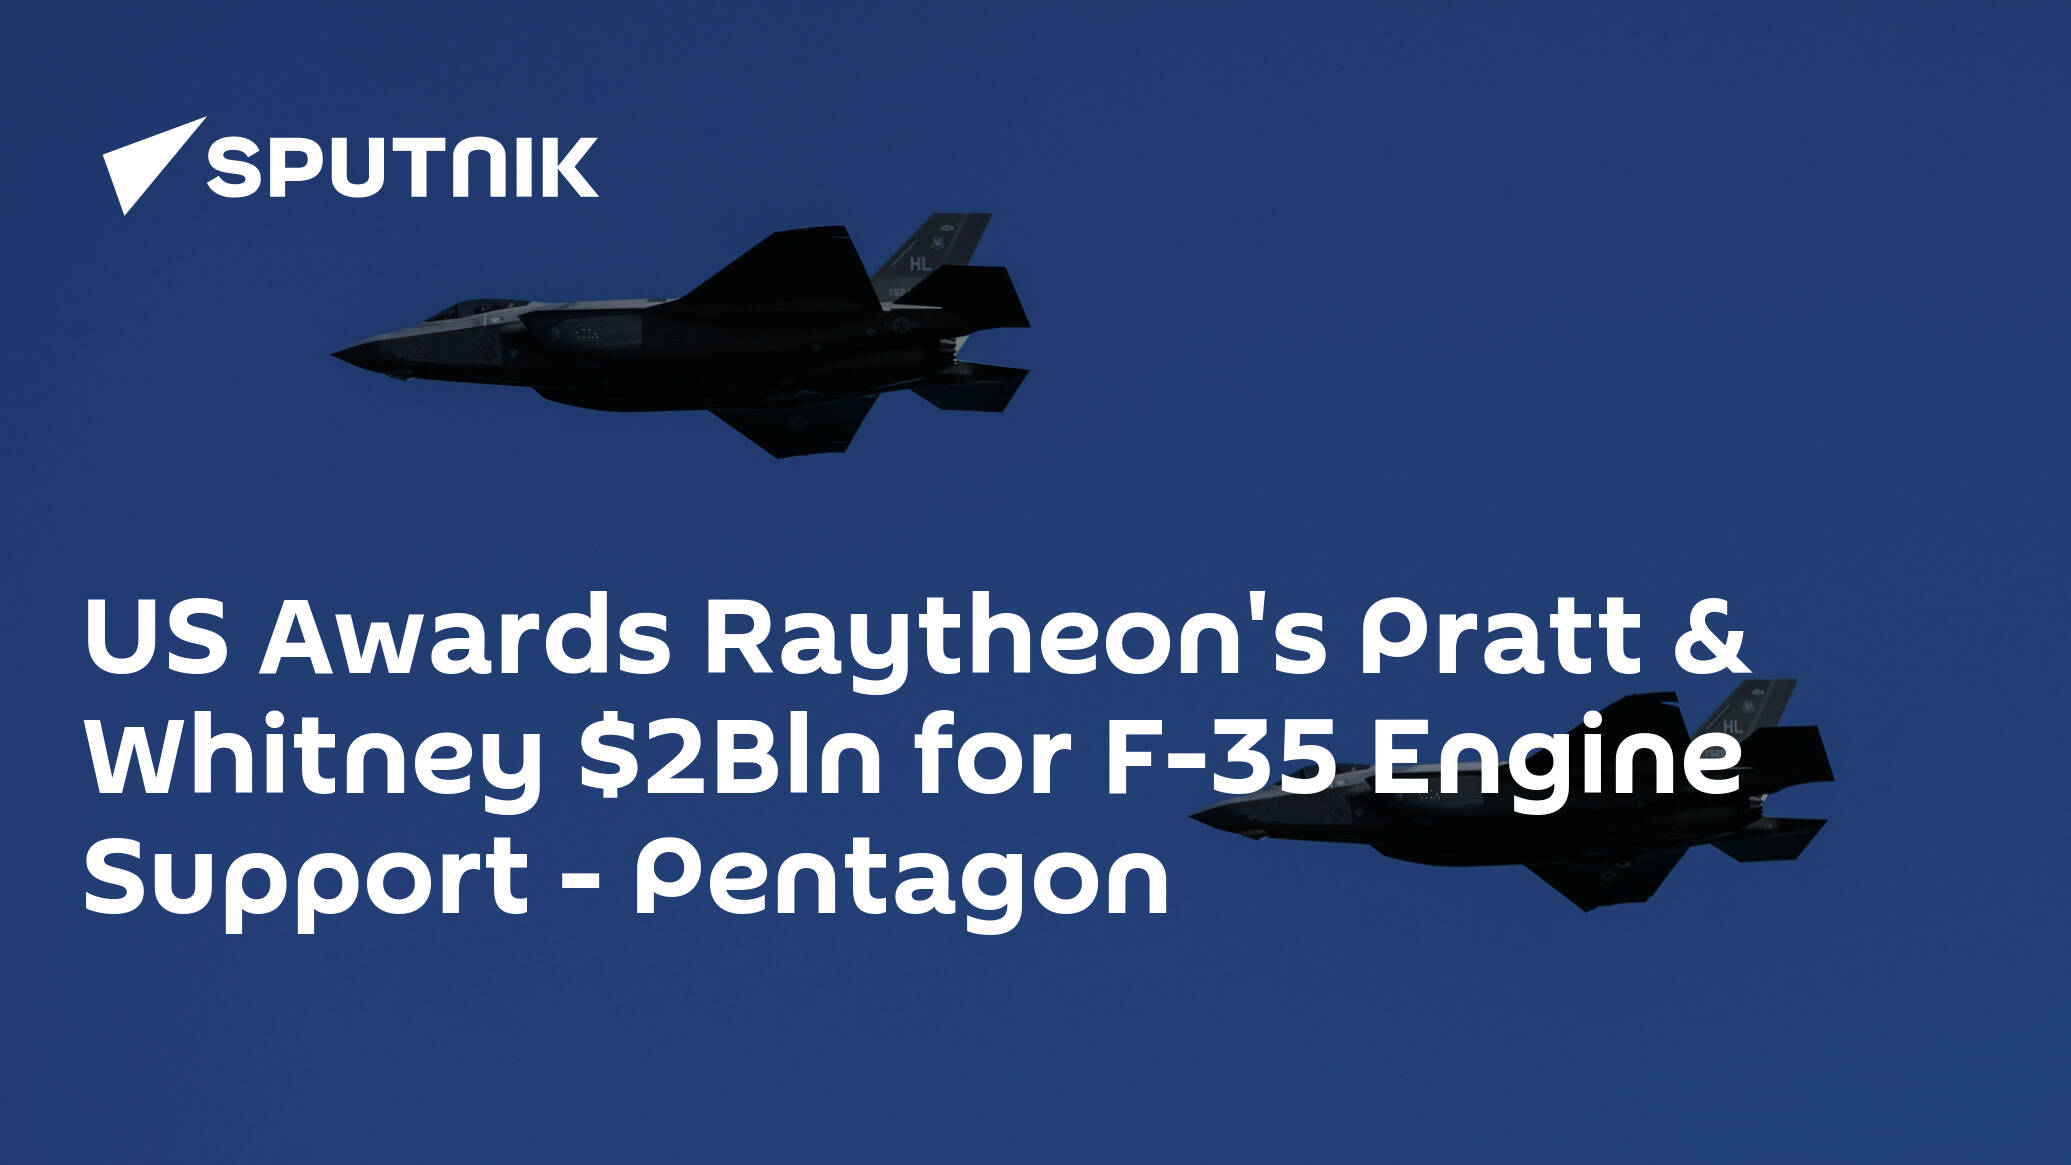 US Awards Raytheon's Pratt & Whitney Bln for F-35 Engine Support – Pentagon